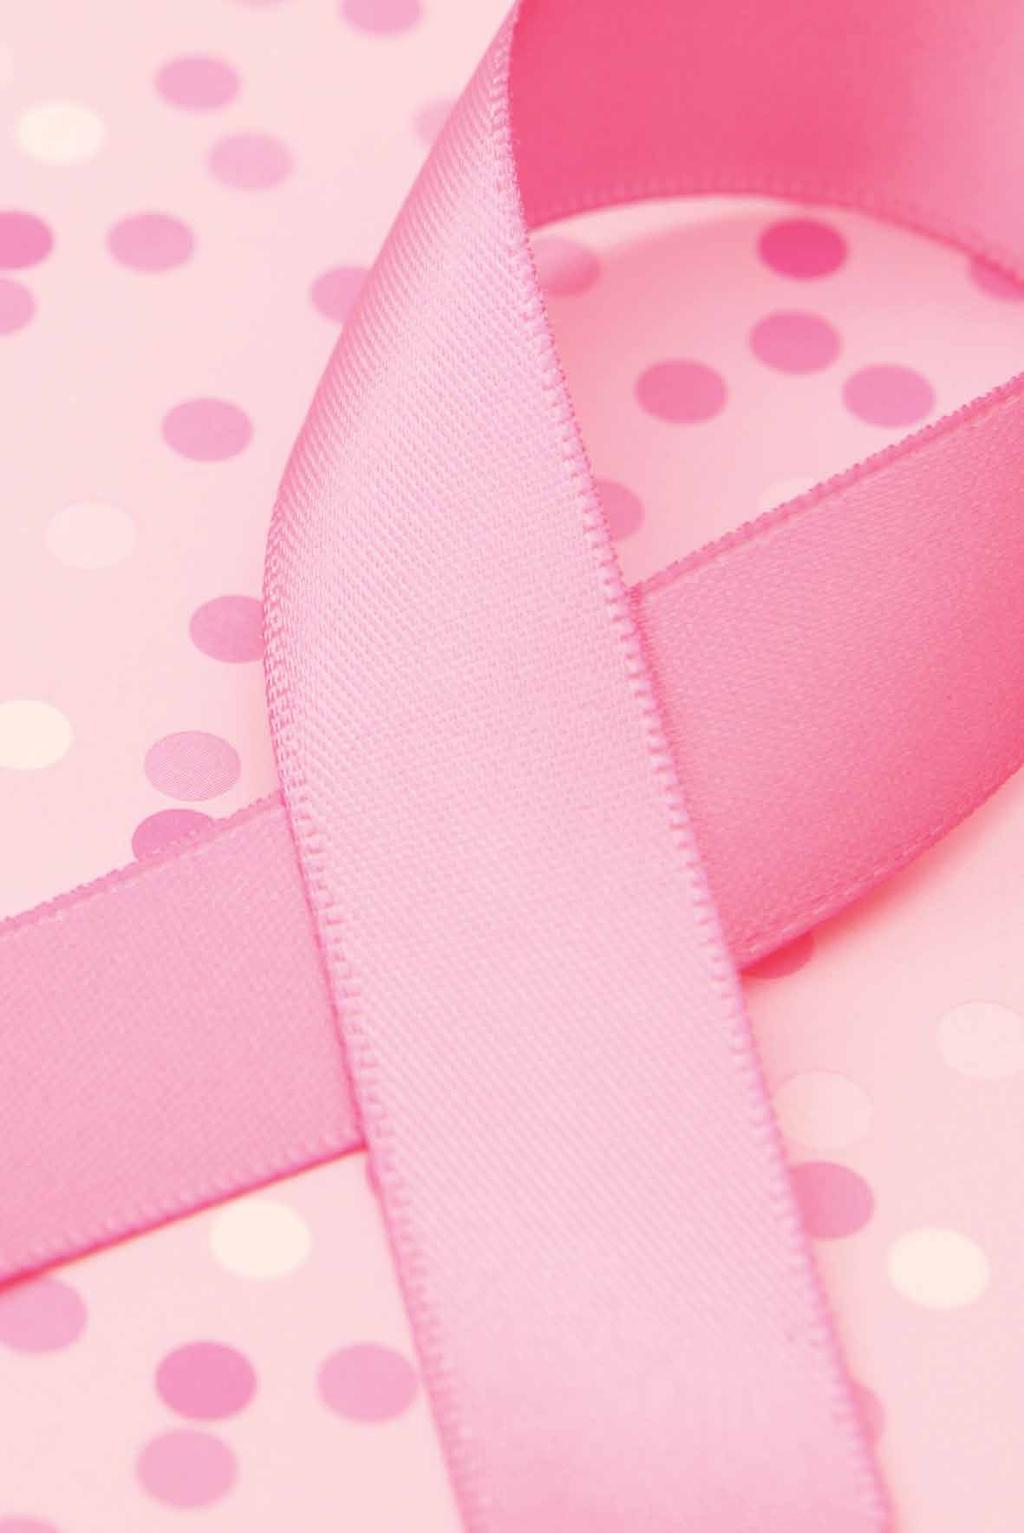 Best of San Antonio Breast Cancer